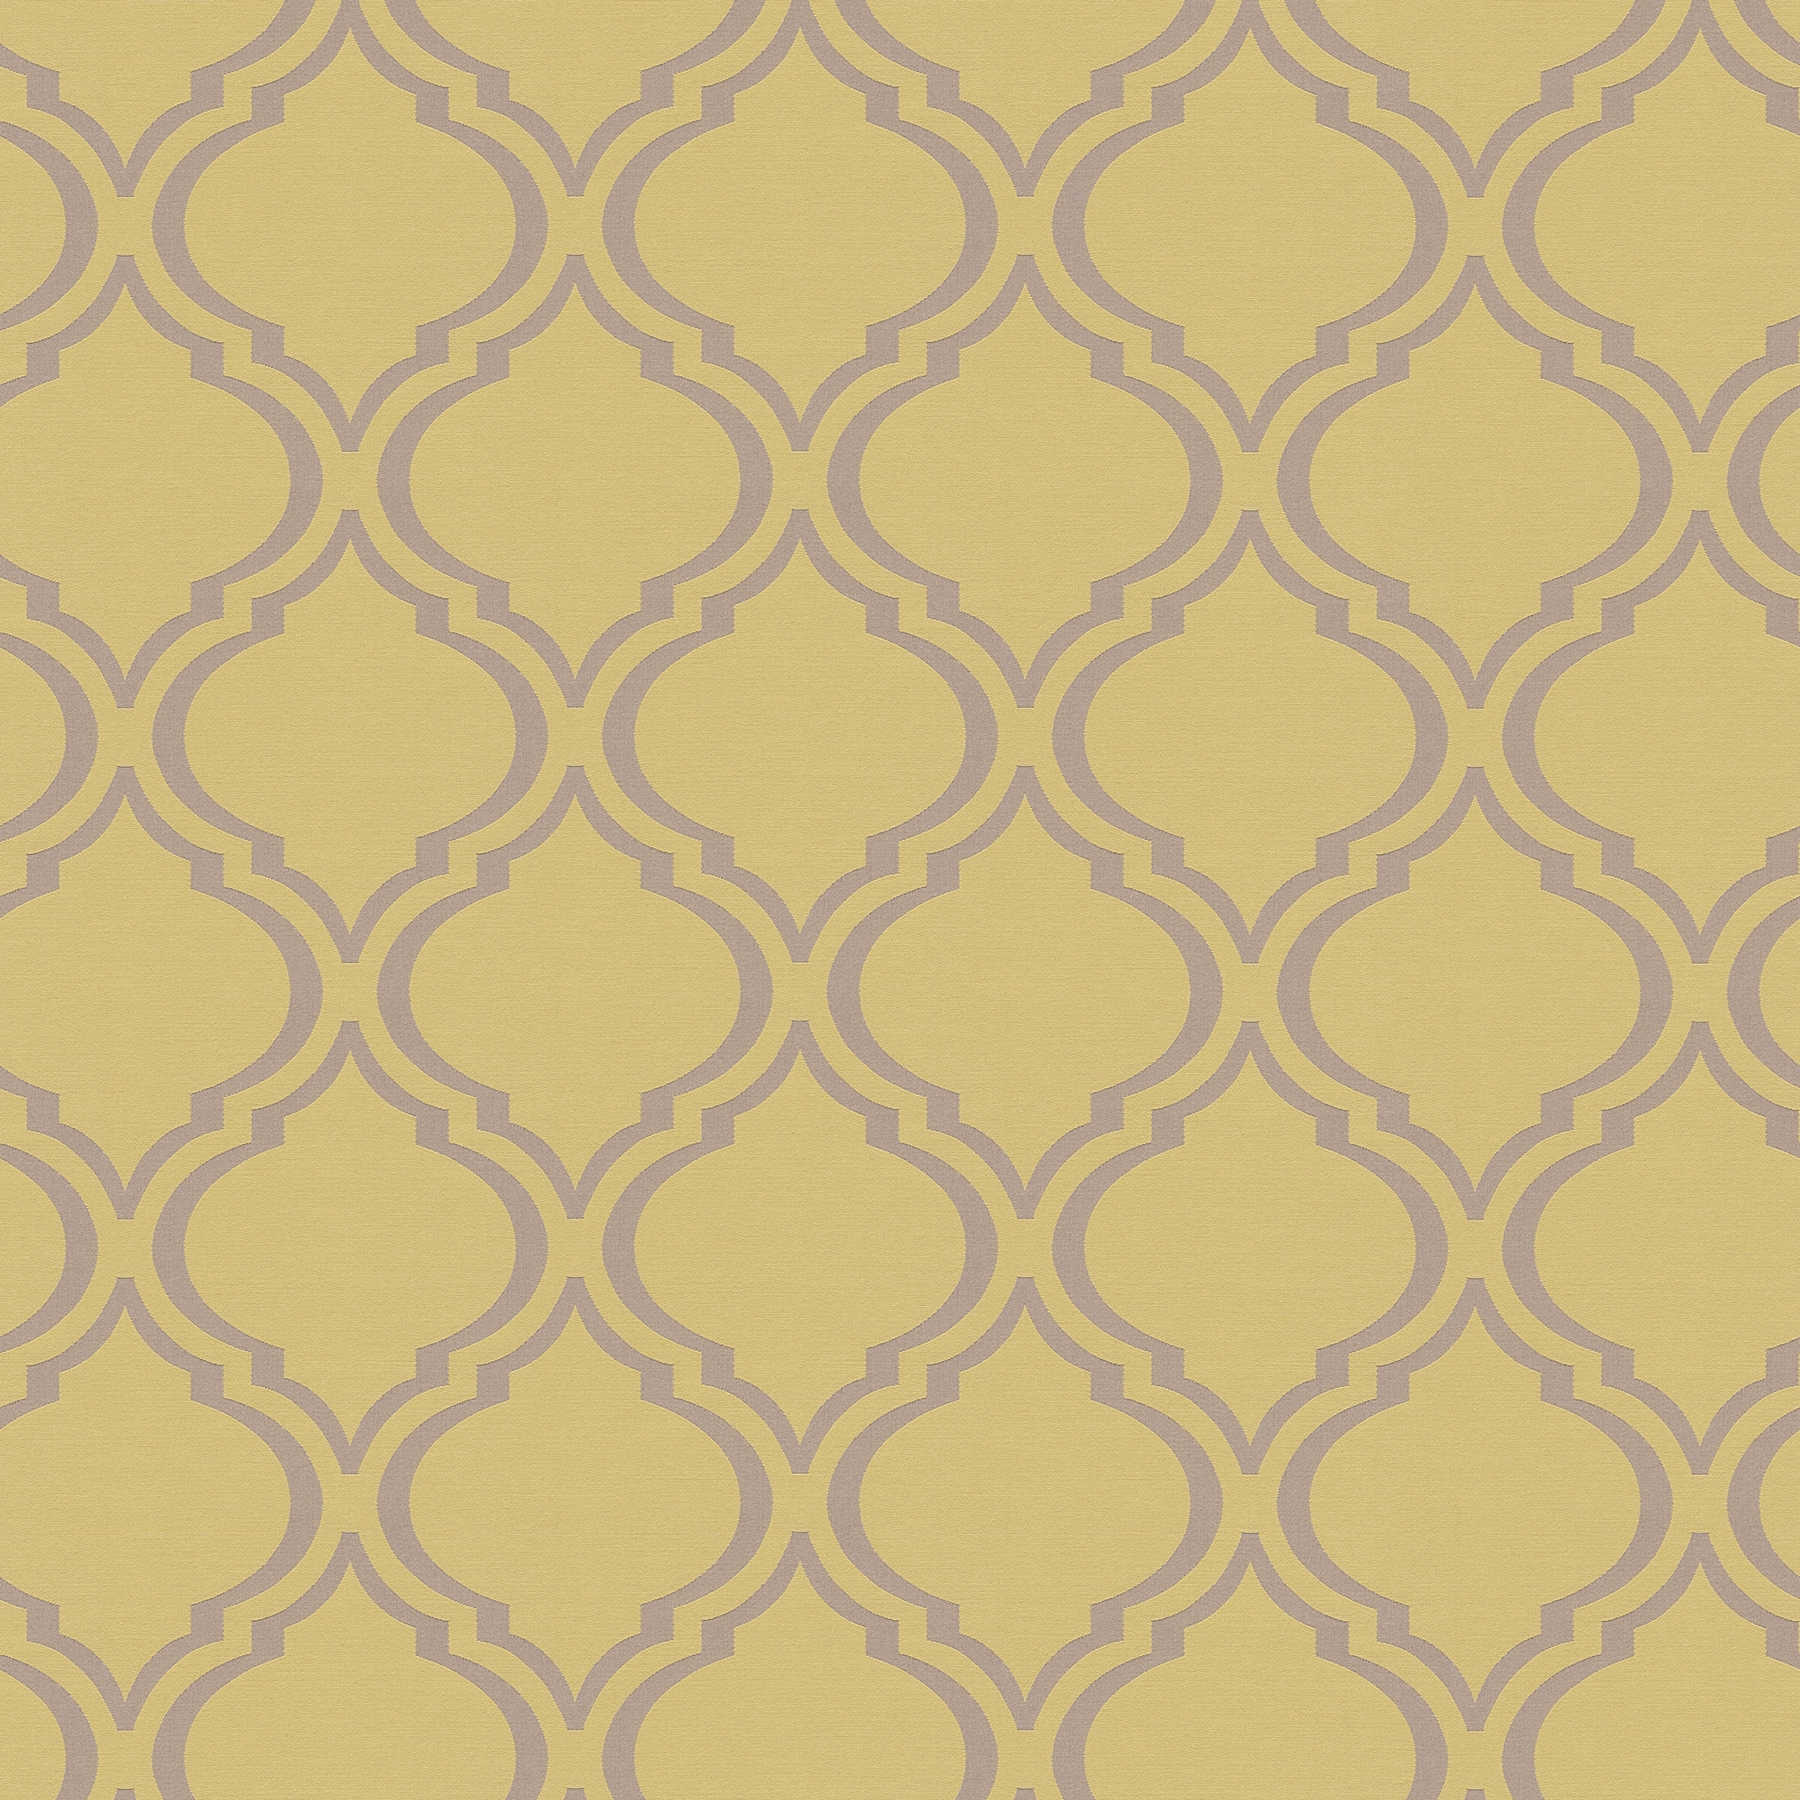 Retro wallpaper with glossy Art Deco pattern - yellow, green, grey
